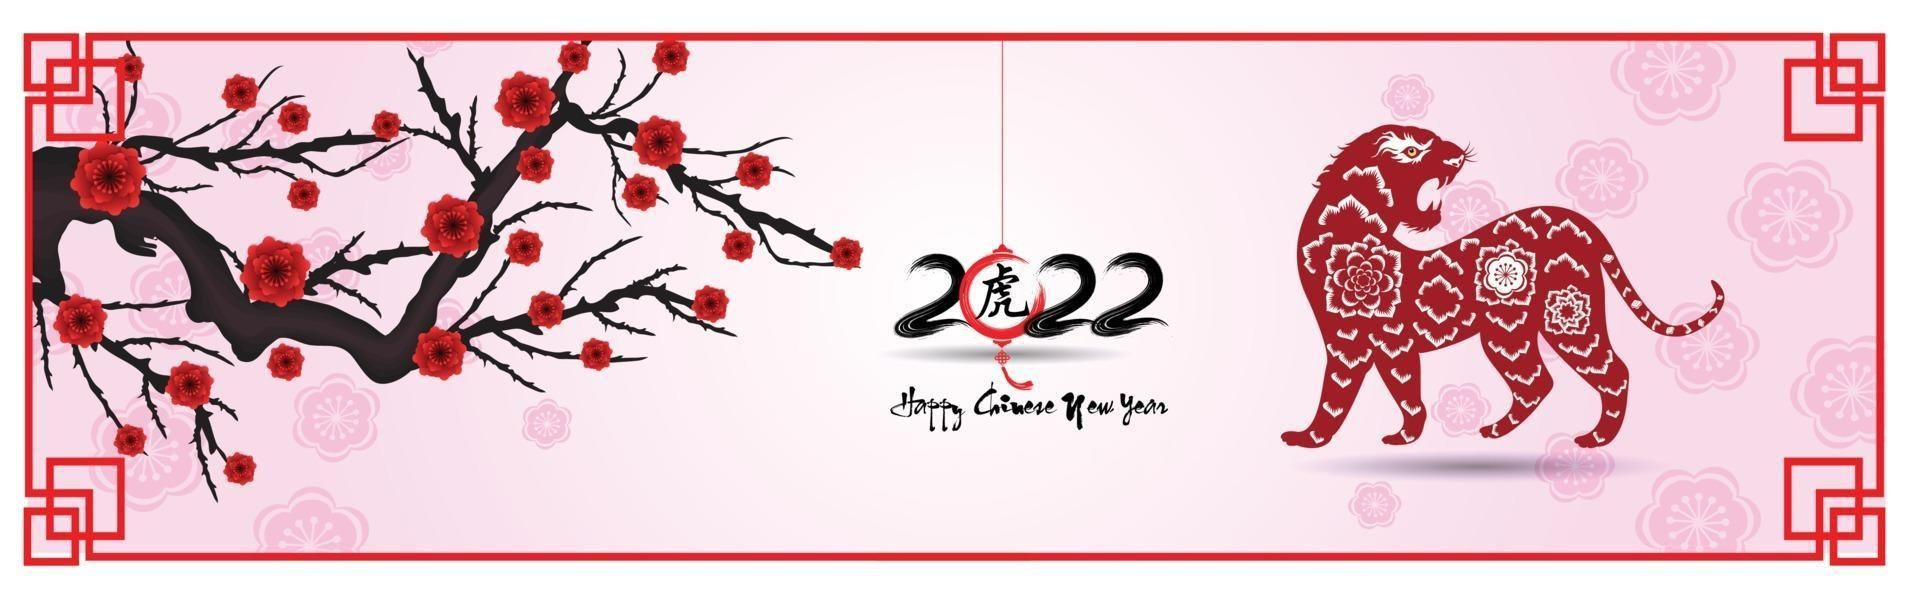 When Is Chinese New Year 2022 Lunar Calendar